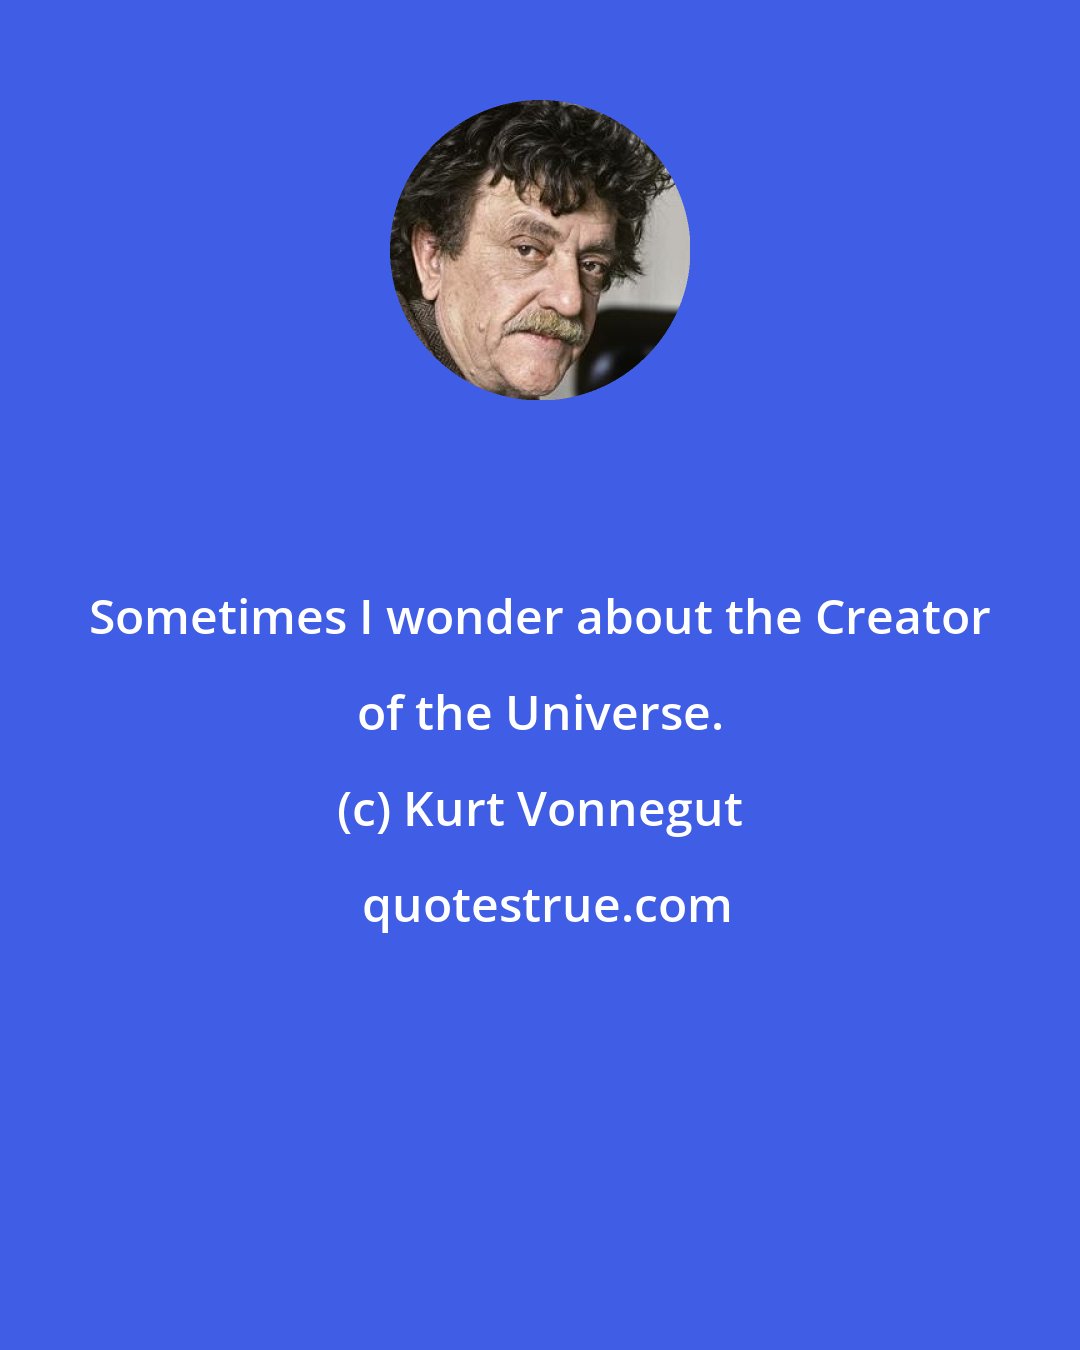 Kurt Vonnegut: Sometimes I wonder about the Creator of the Universe.